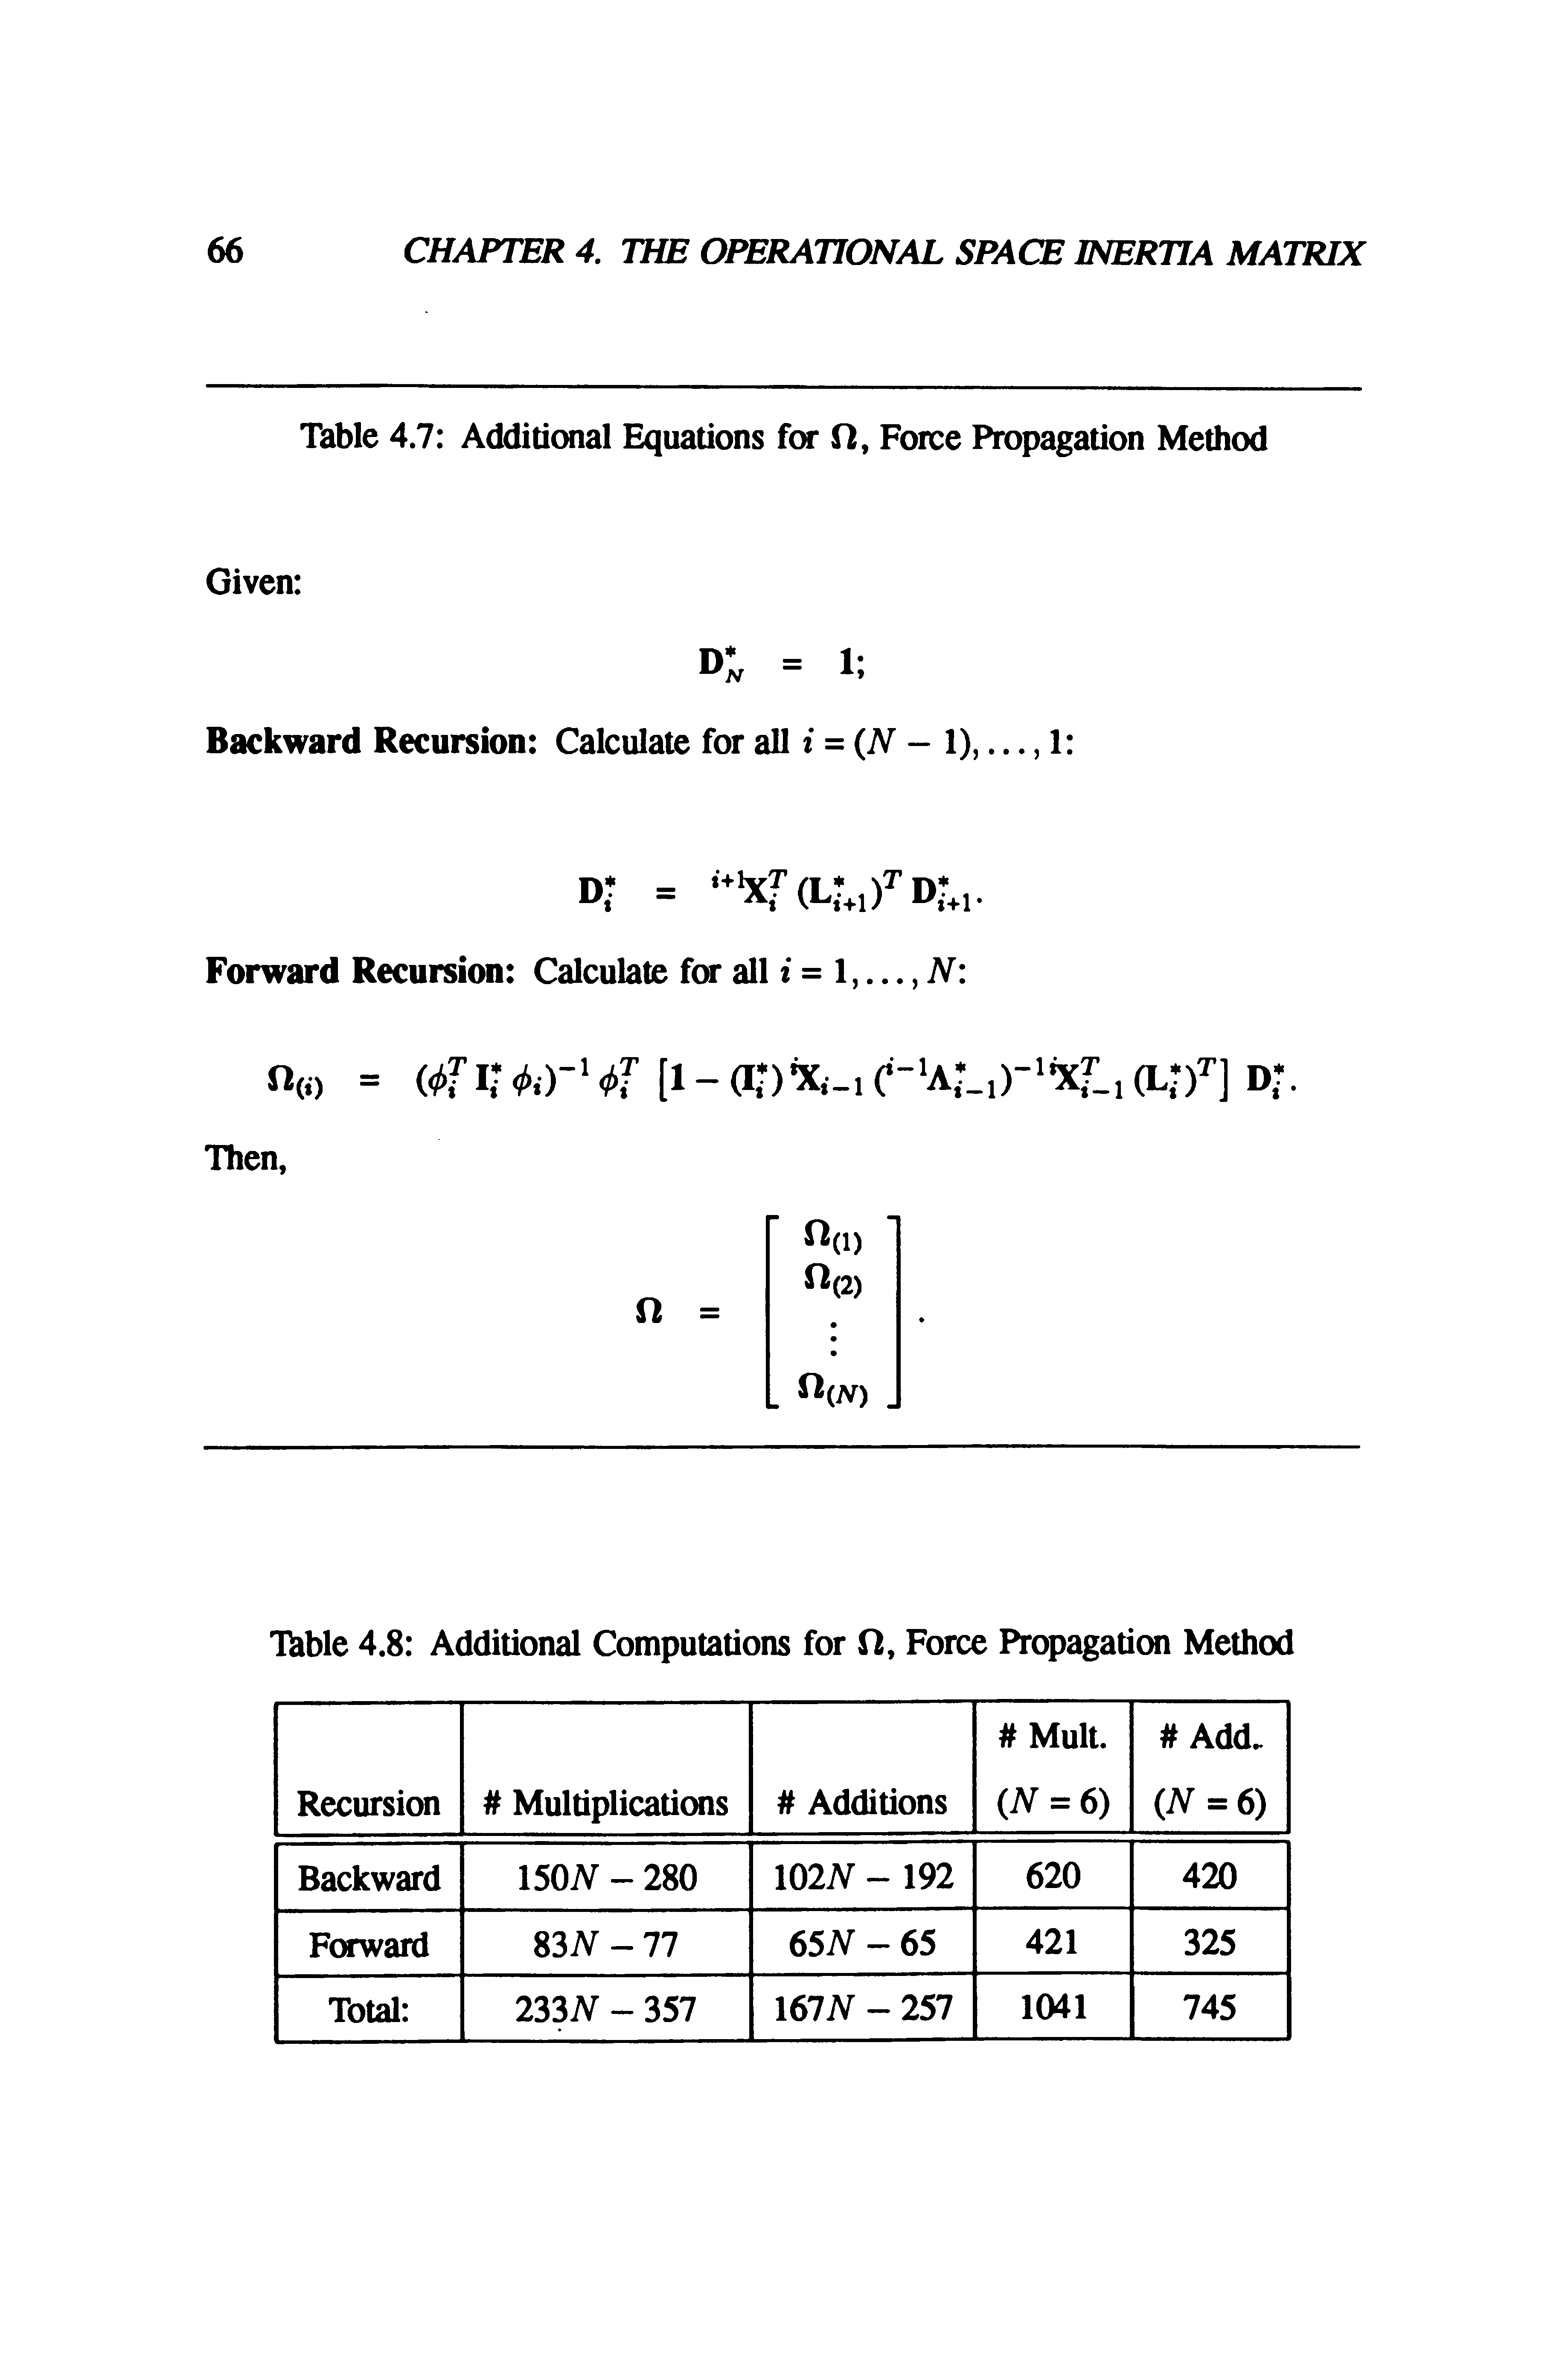 Table 4.7 Additional Equations fa fl, Force Propagation Method...